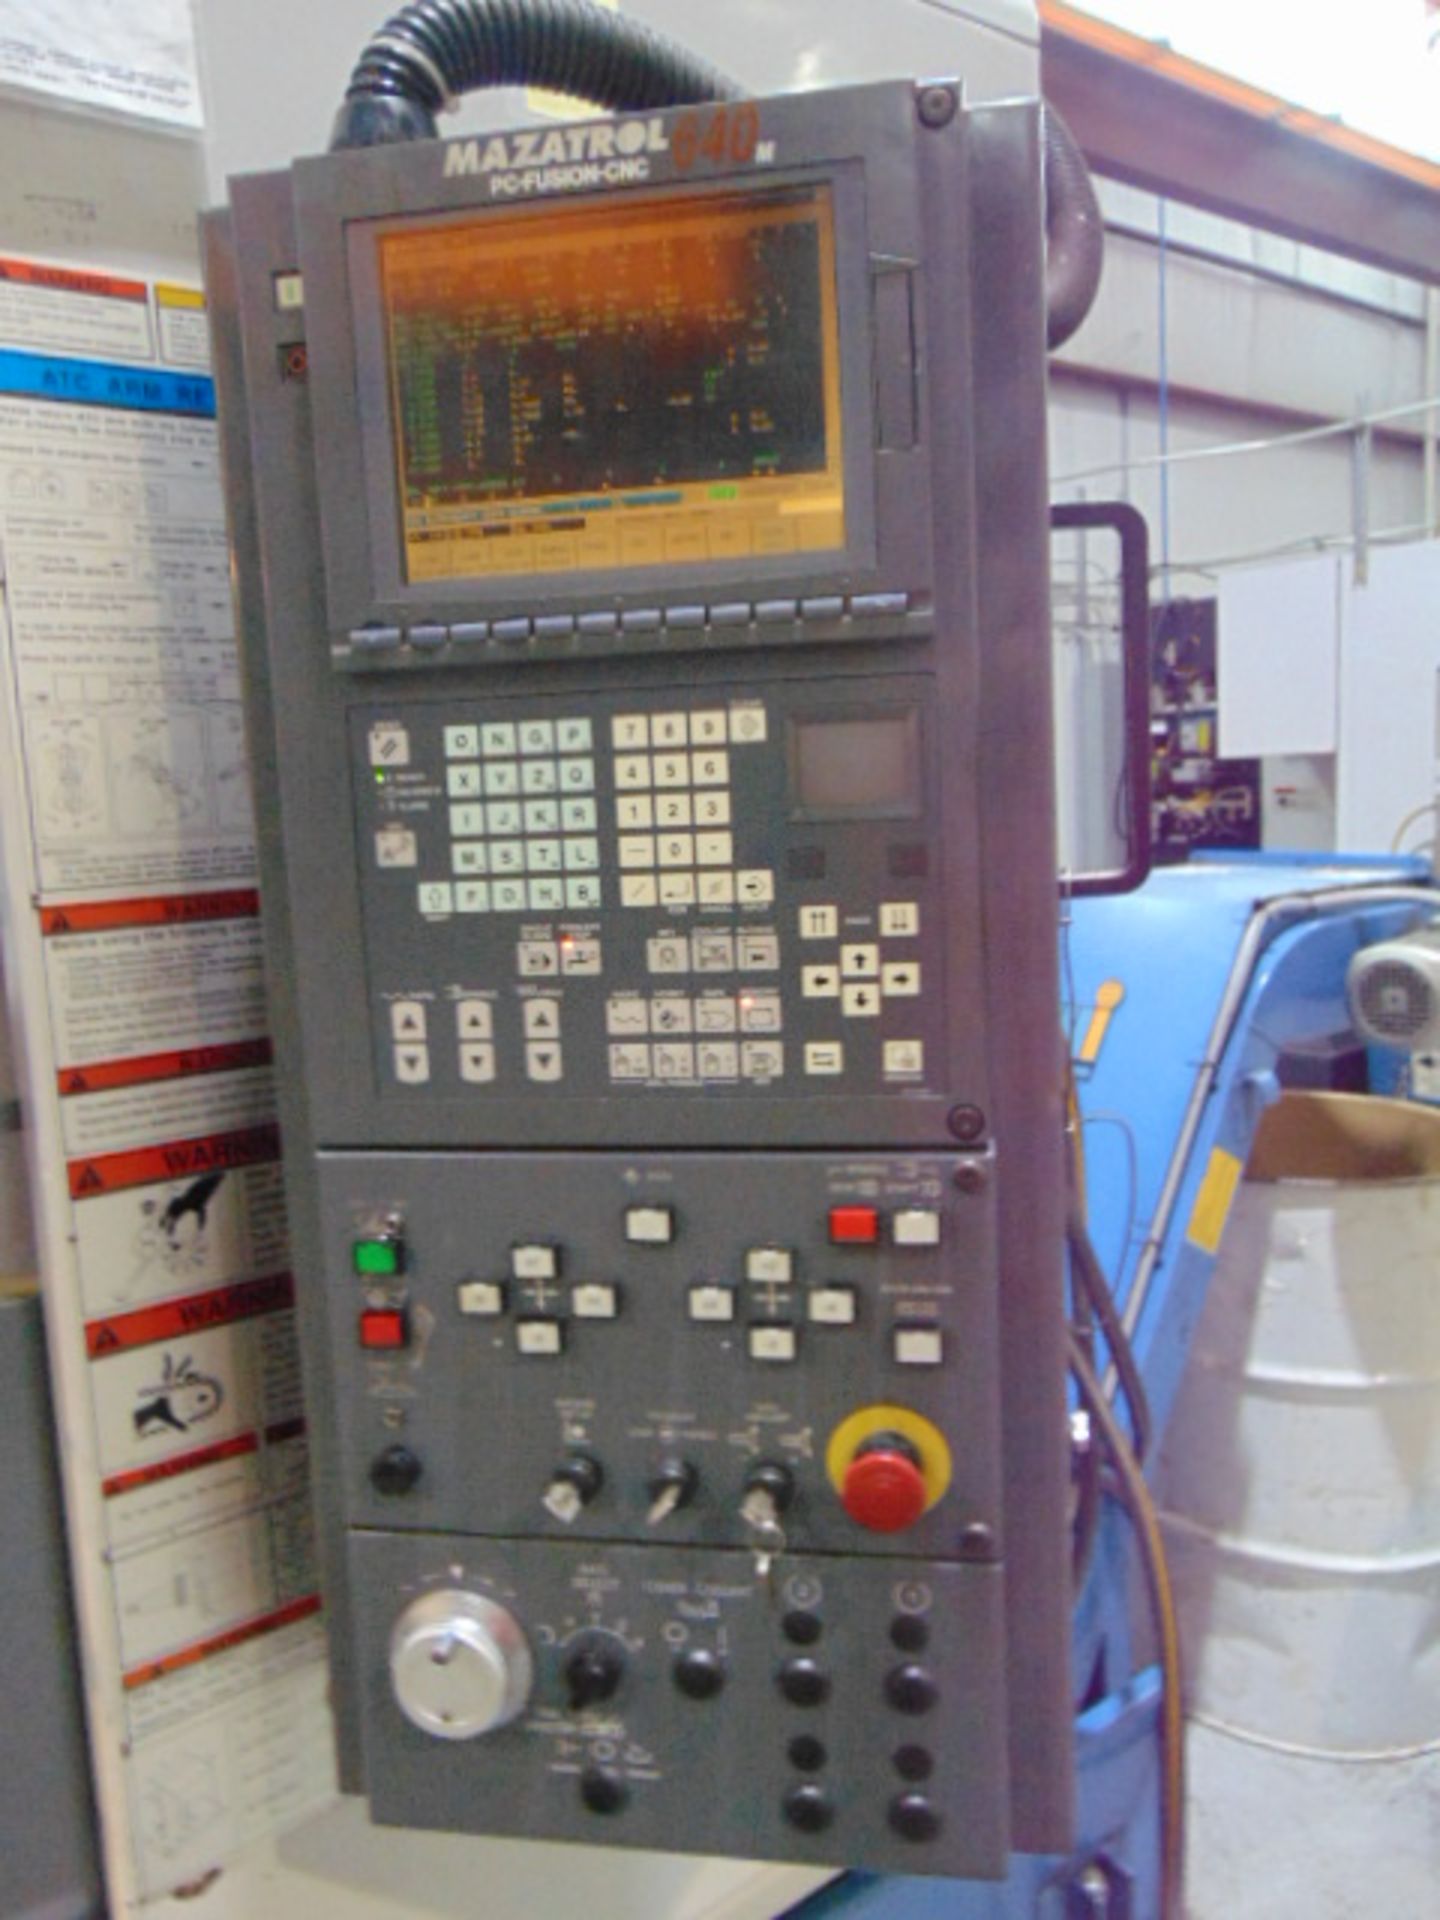 CNC VERTICAL MACHINING CENTER, MAZAK MDL. VTC-250/50, new 2001, Mazatrol 640M CNC control, 73" x 25" - Image 2 of 15